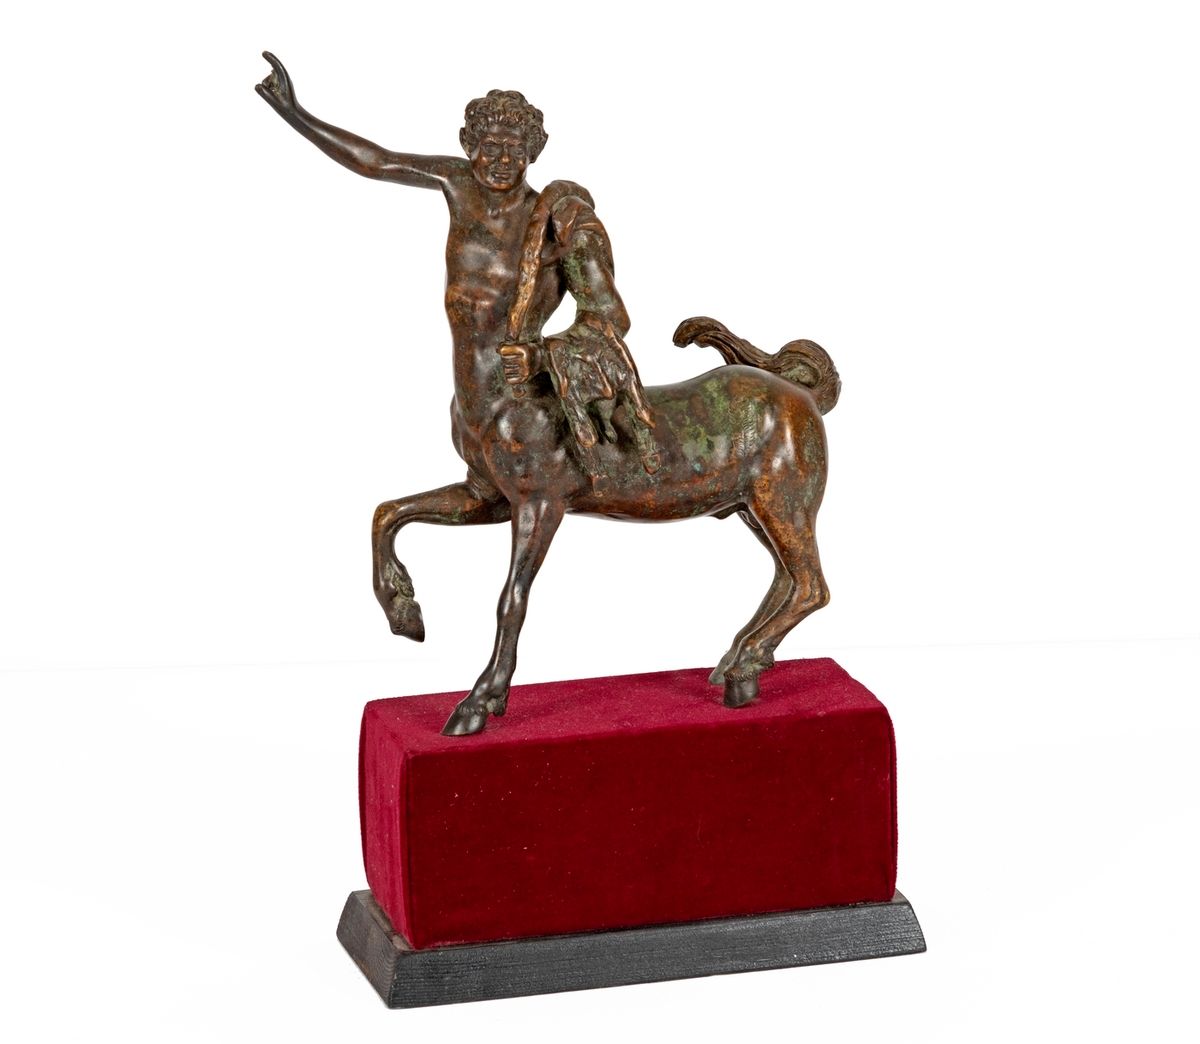 Null 年轻的半人马
带铜锈的青铜器
意大利作品，可能是19世纪
根据1736年Furietti先生在罗马进行挖掘时在哈德良皇帝的别墅里发现的一个半人马。今天&hellip;